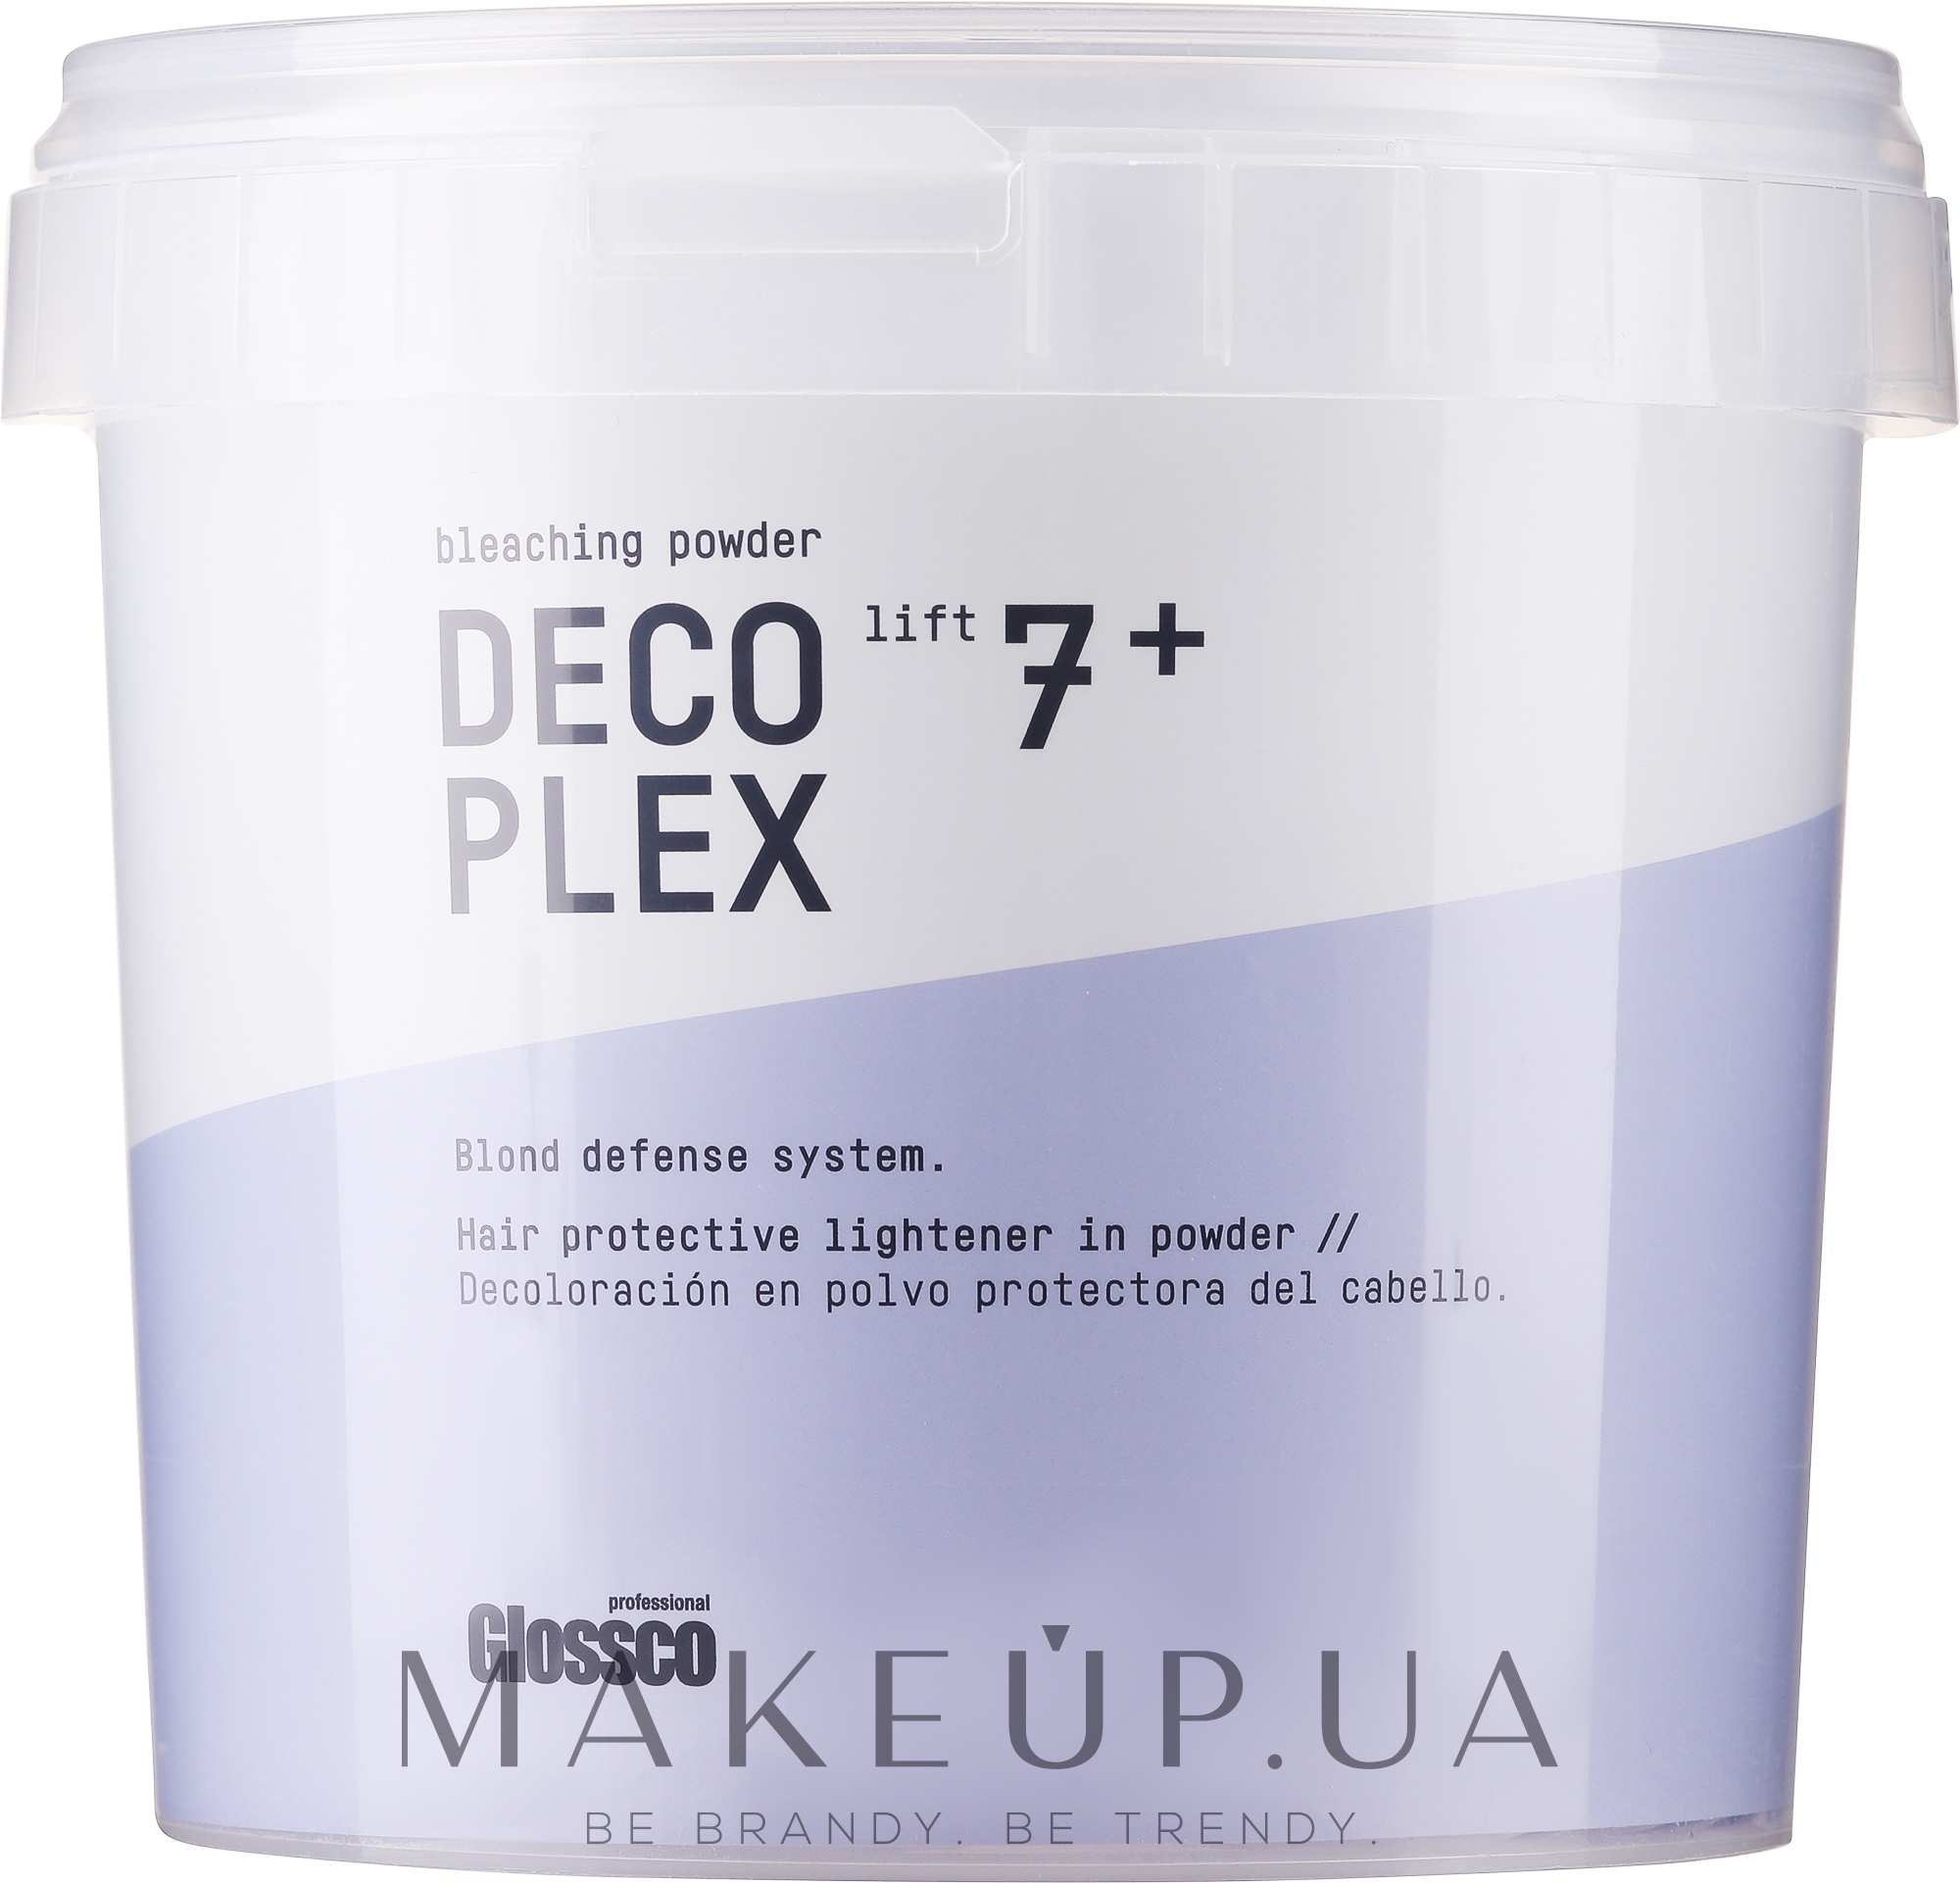 Освітлювальна пудра для волосся - Glossco Color DecoPlex Light 7+ Blond Defense System — фото 1000g